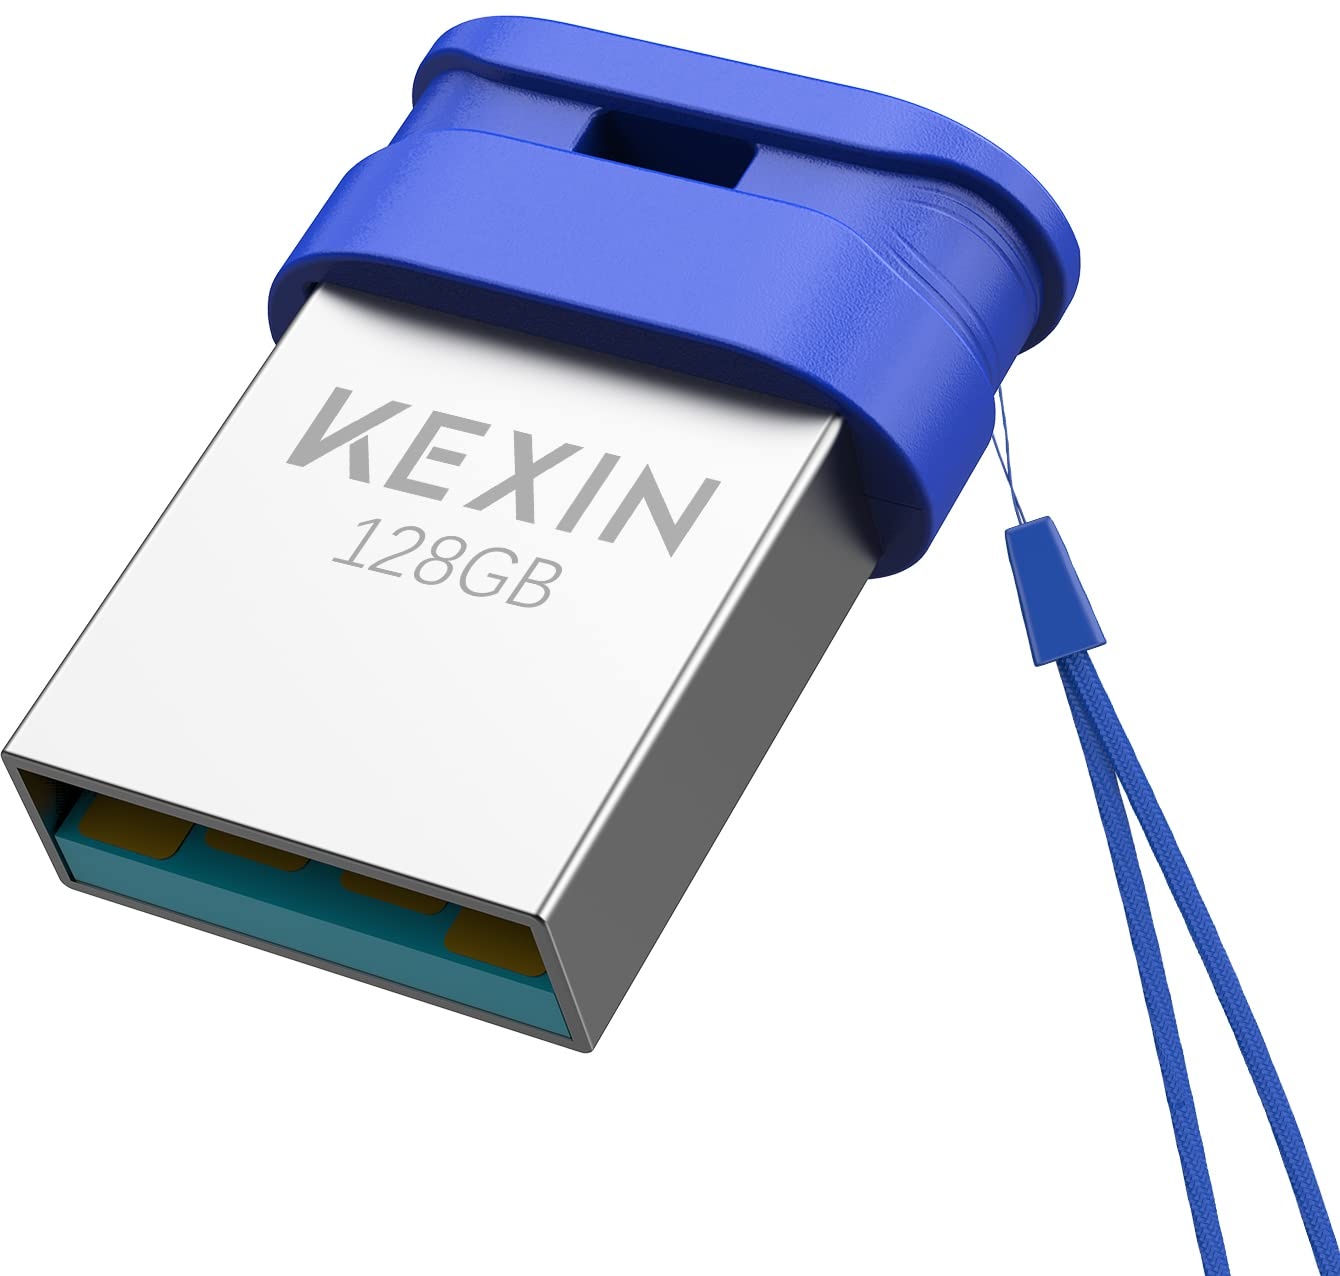 KEXIN 128GB USB Stick Speicherstick USB 3.0 Flash-Laufwerk 128 GB Speicherstick Mini USB-Stick USB Flash Drive USB Memory Stick Für Laptops, Spielkonsolen und Auto-Audiosysteme, Plug-and-Stay Blau